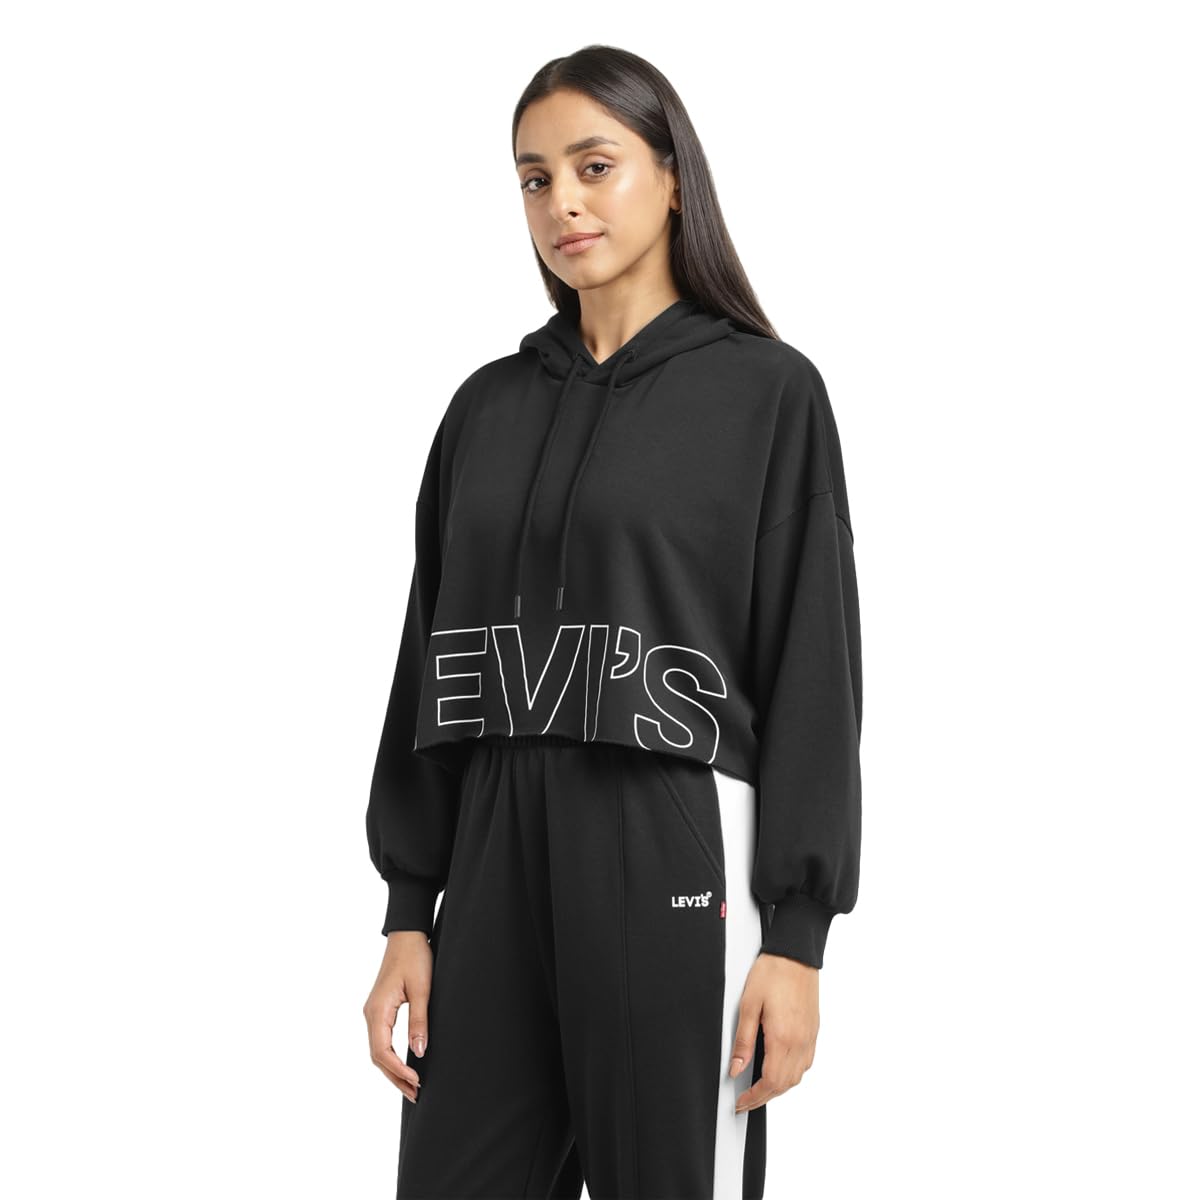 Levi's Women's Brand Logo Black and White Hooded Sweatshirt